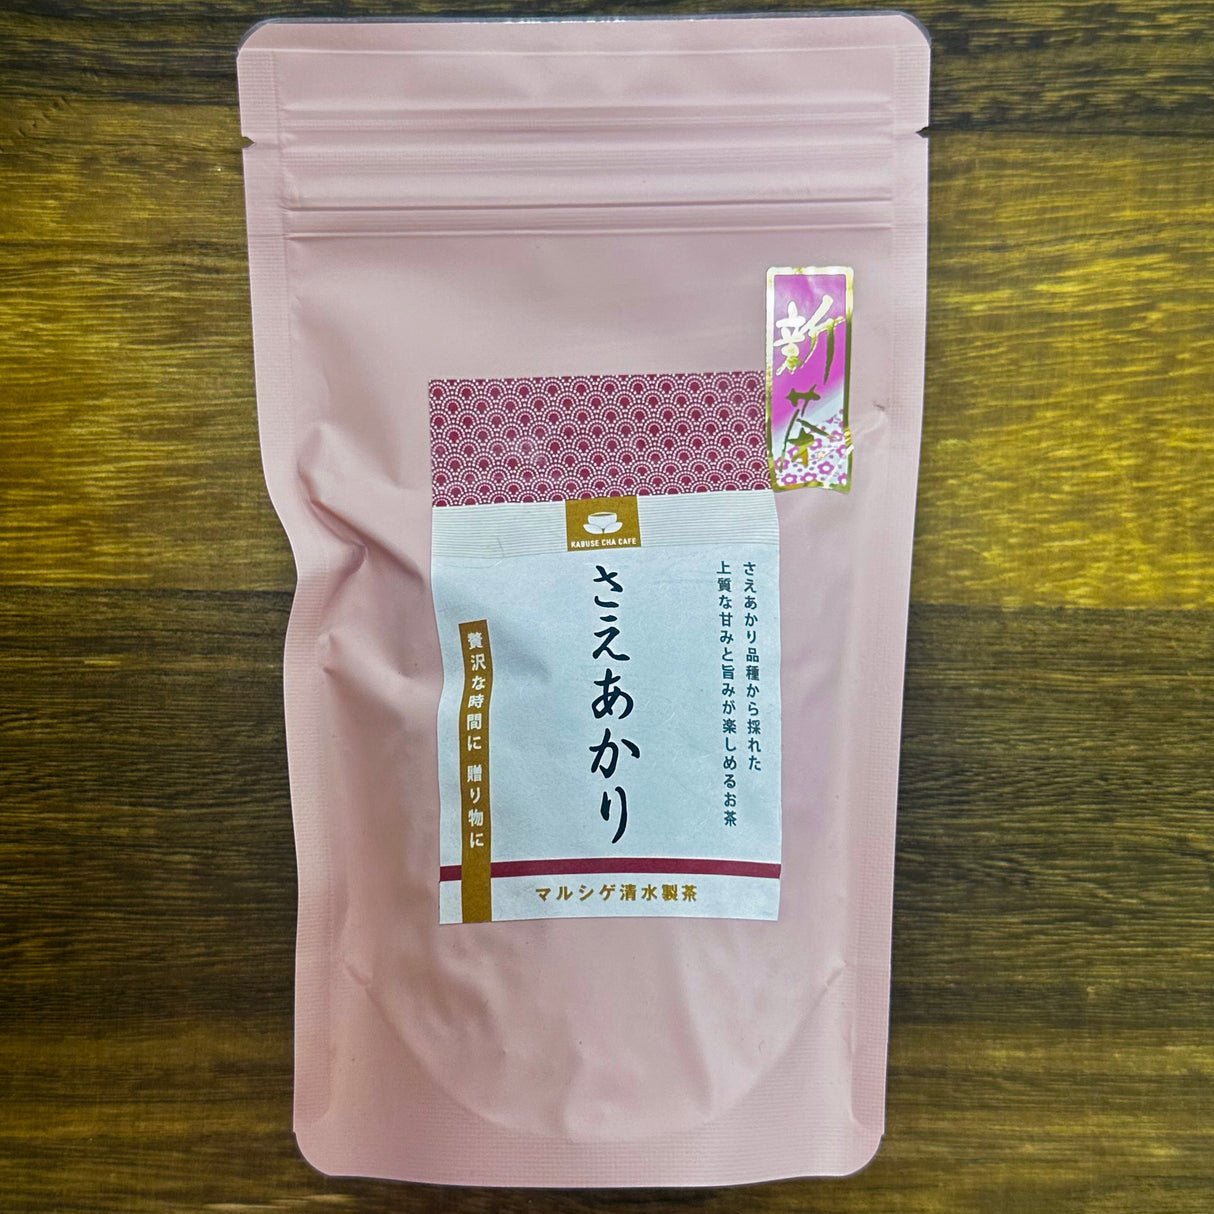 Marushige Shimizu Tea Farm: Kabusecha Shaded Green Tea, Saeakari さえあかり